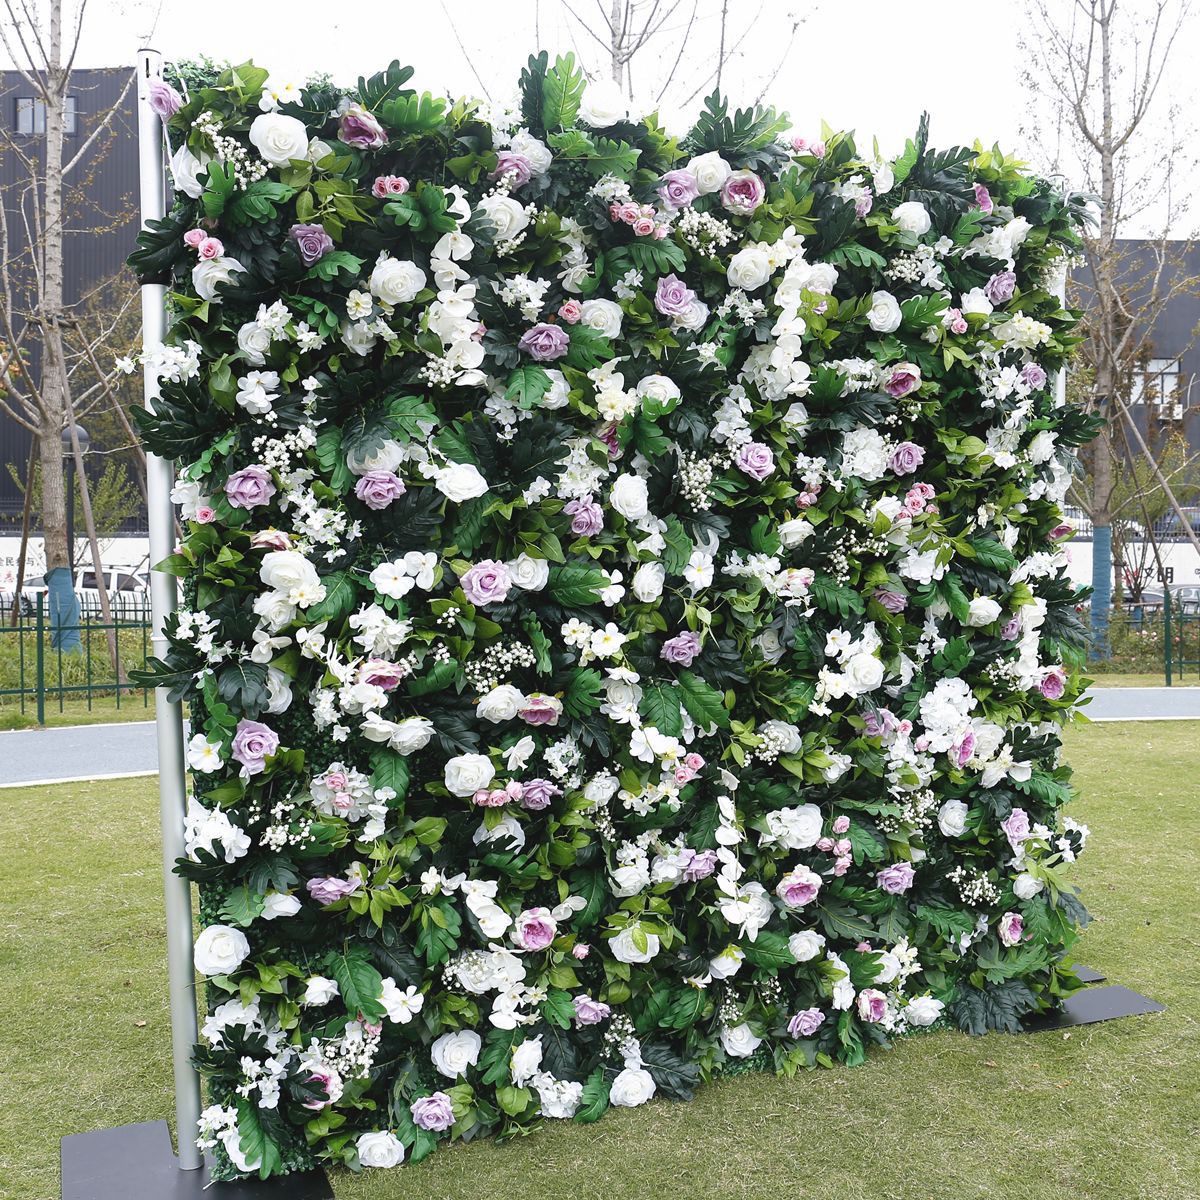 5D platno dno simulacija ruža zid pozadina zid svadbena dekoracija zelena biljka zid biljka zid